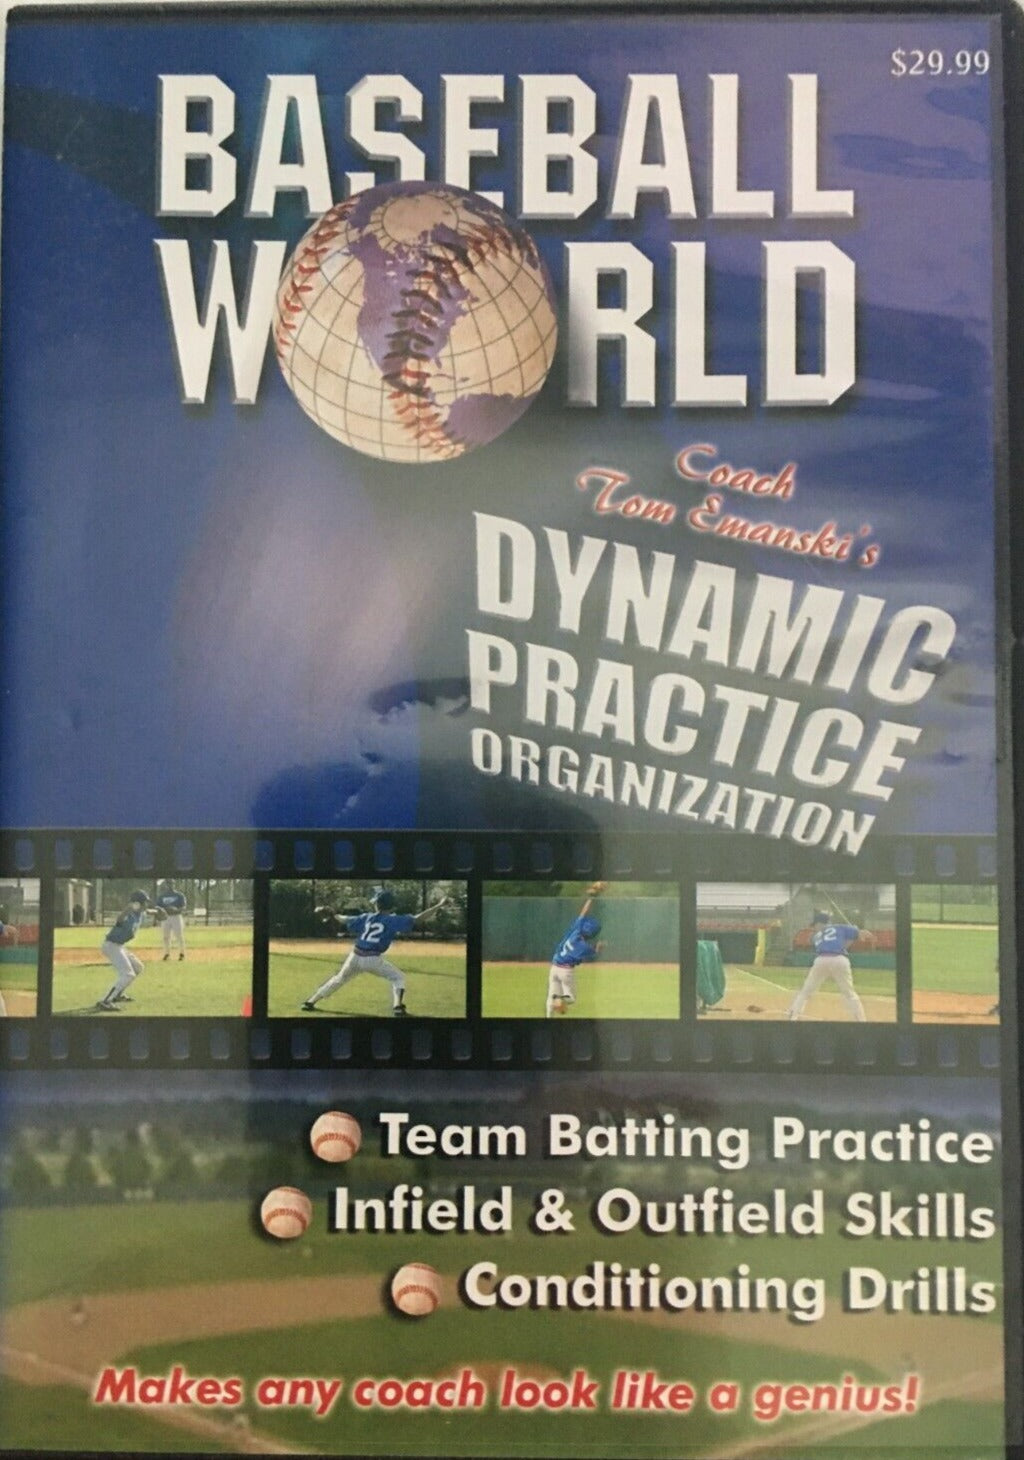 Tom Emanski's Dynamic Baseball Practice Organization